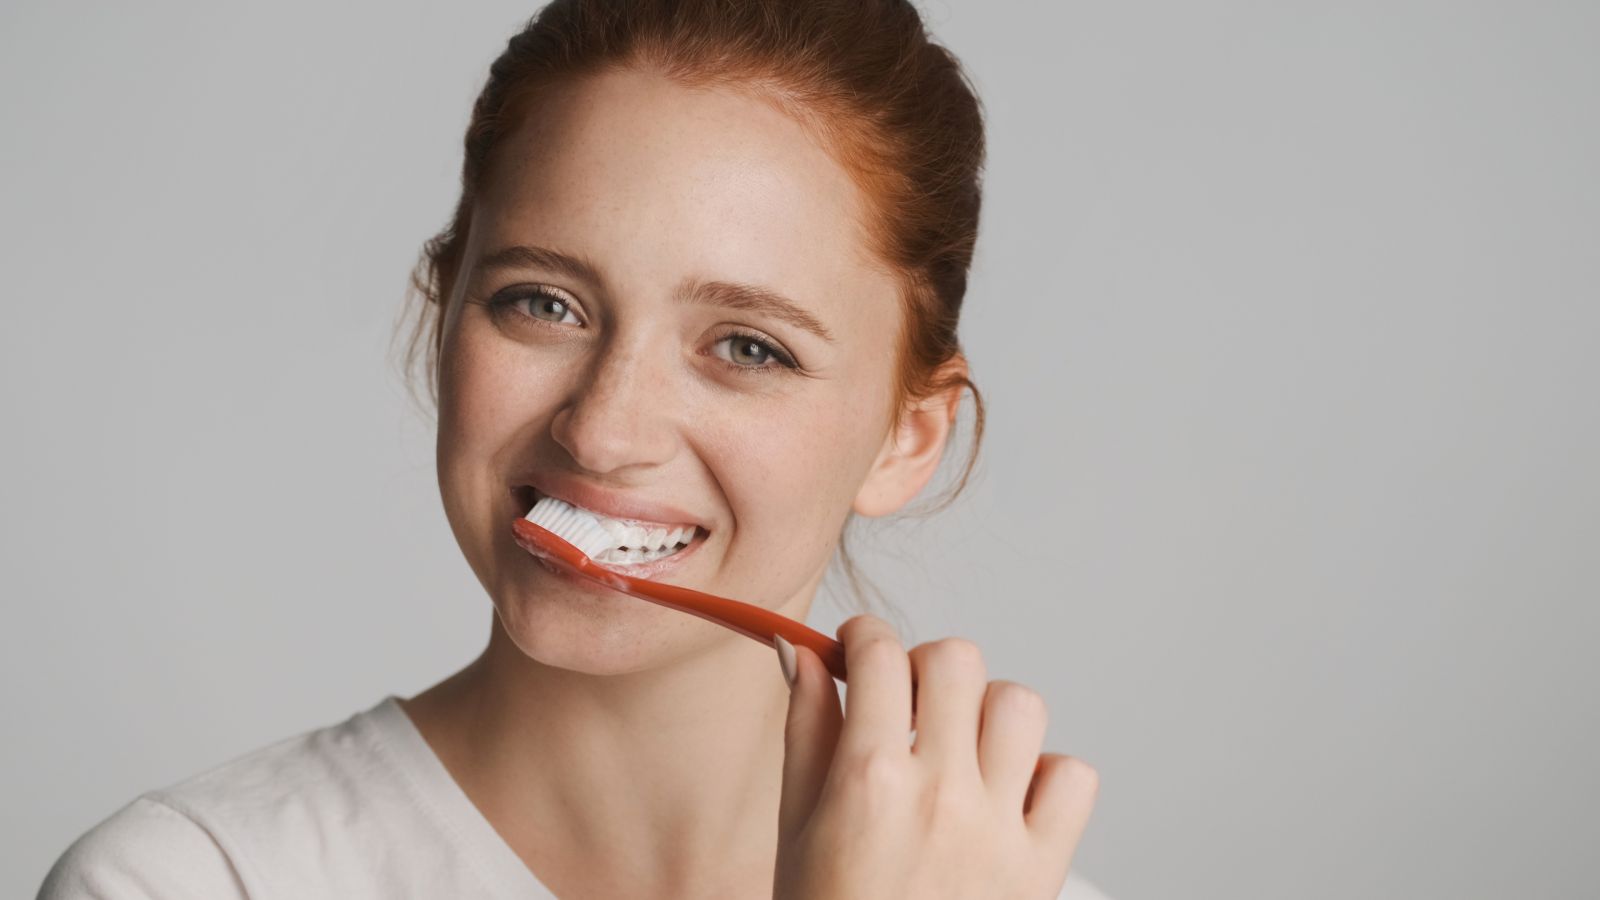 Mi a periodontitis jelentése?